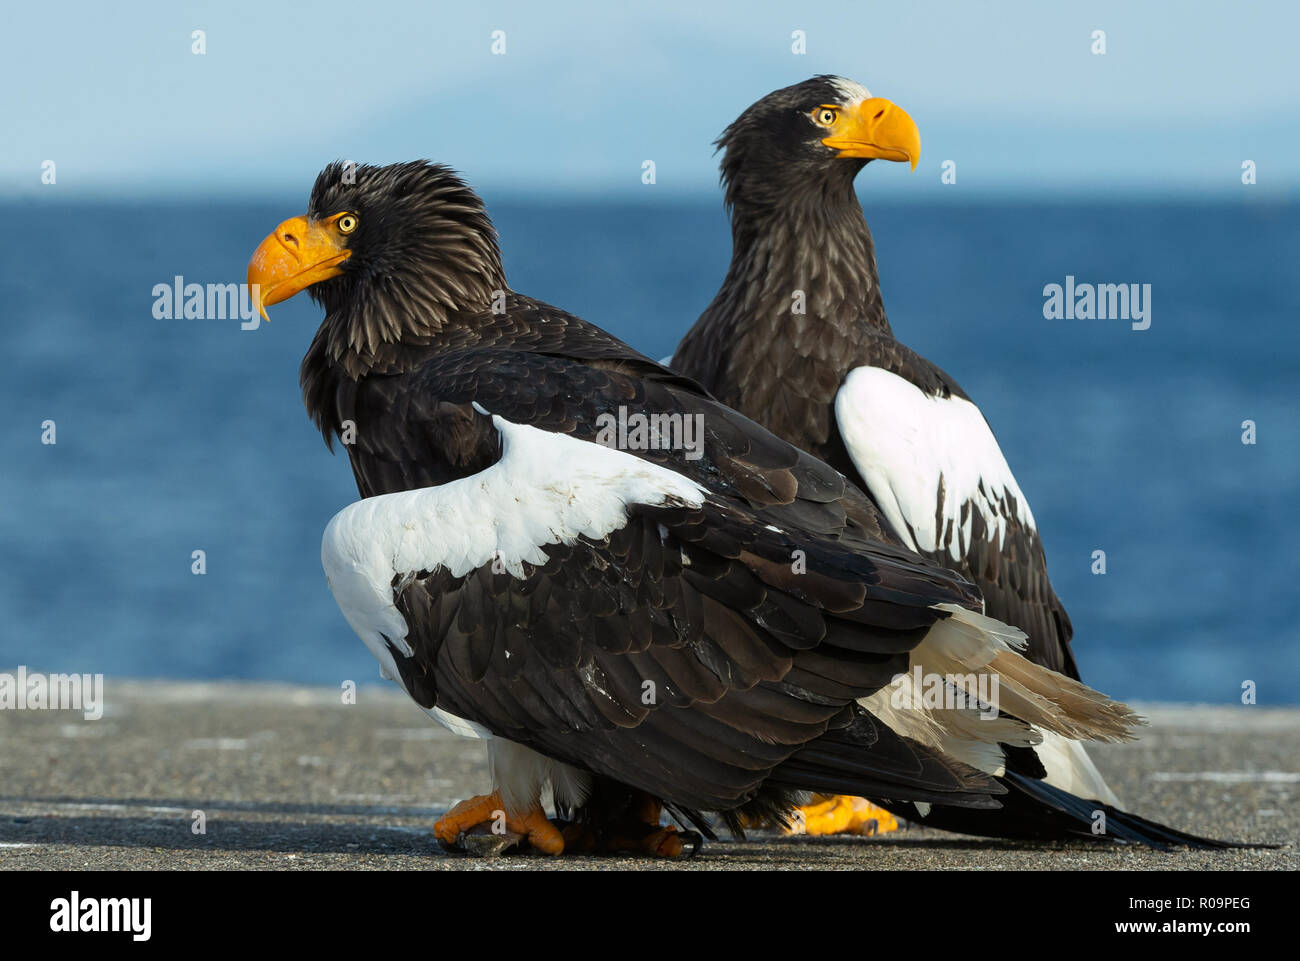 Steller's sea eagles. Blue sky and ocean background. Scientific name: Haliaeetus pelagicus. Natural Habitat. Winter Season. Stock Photo